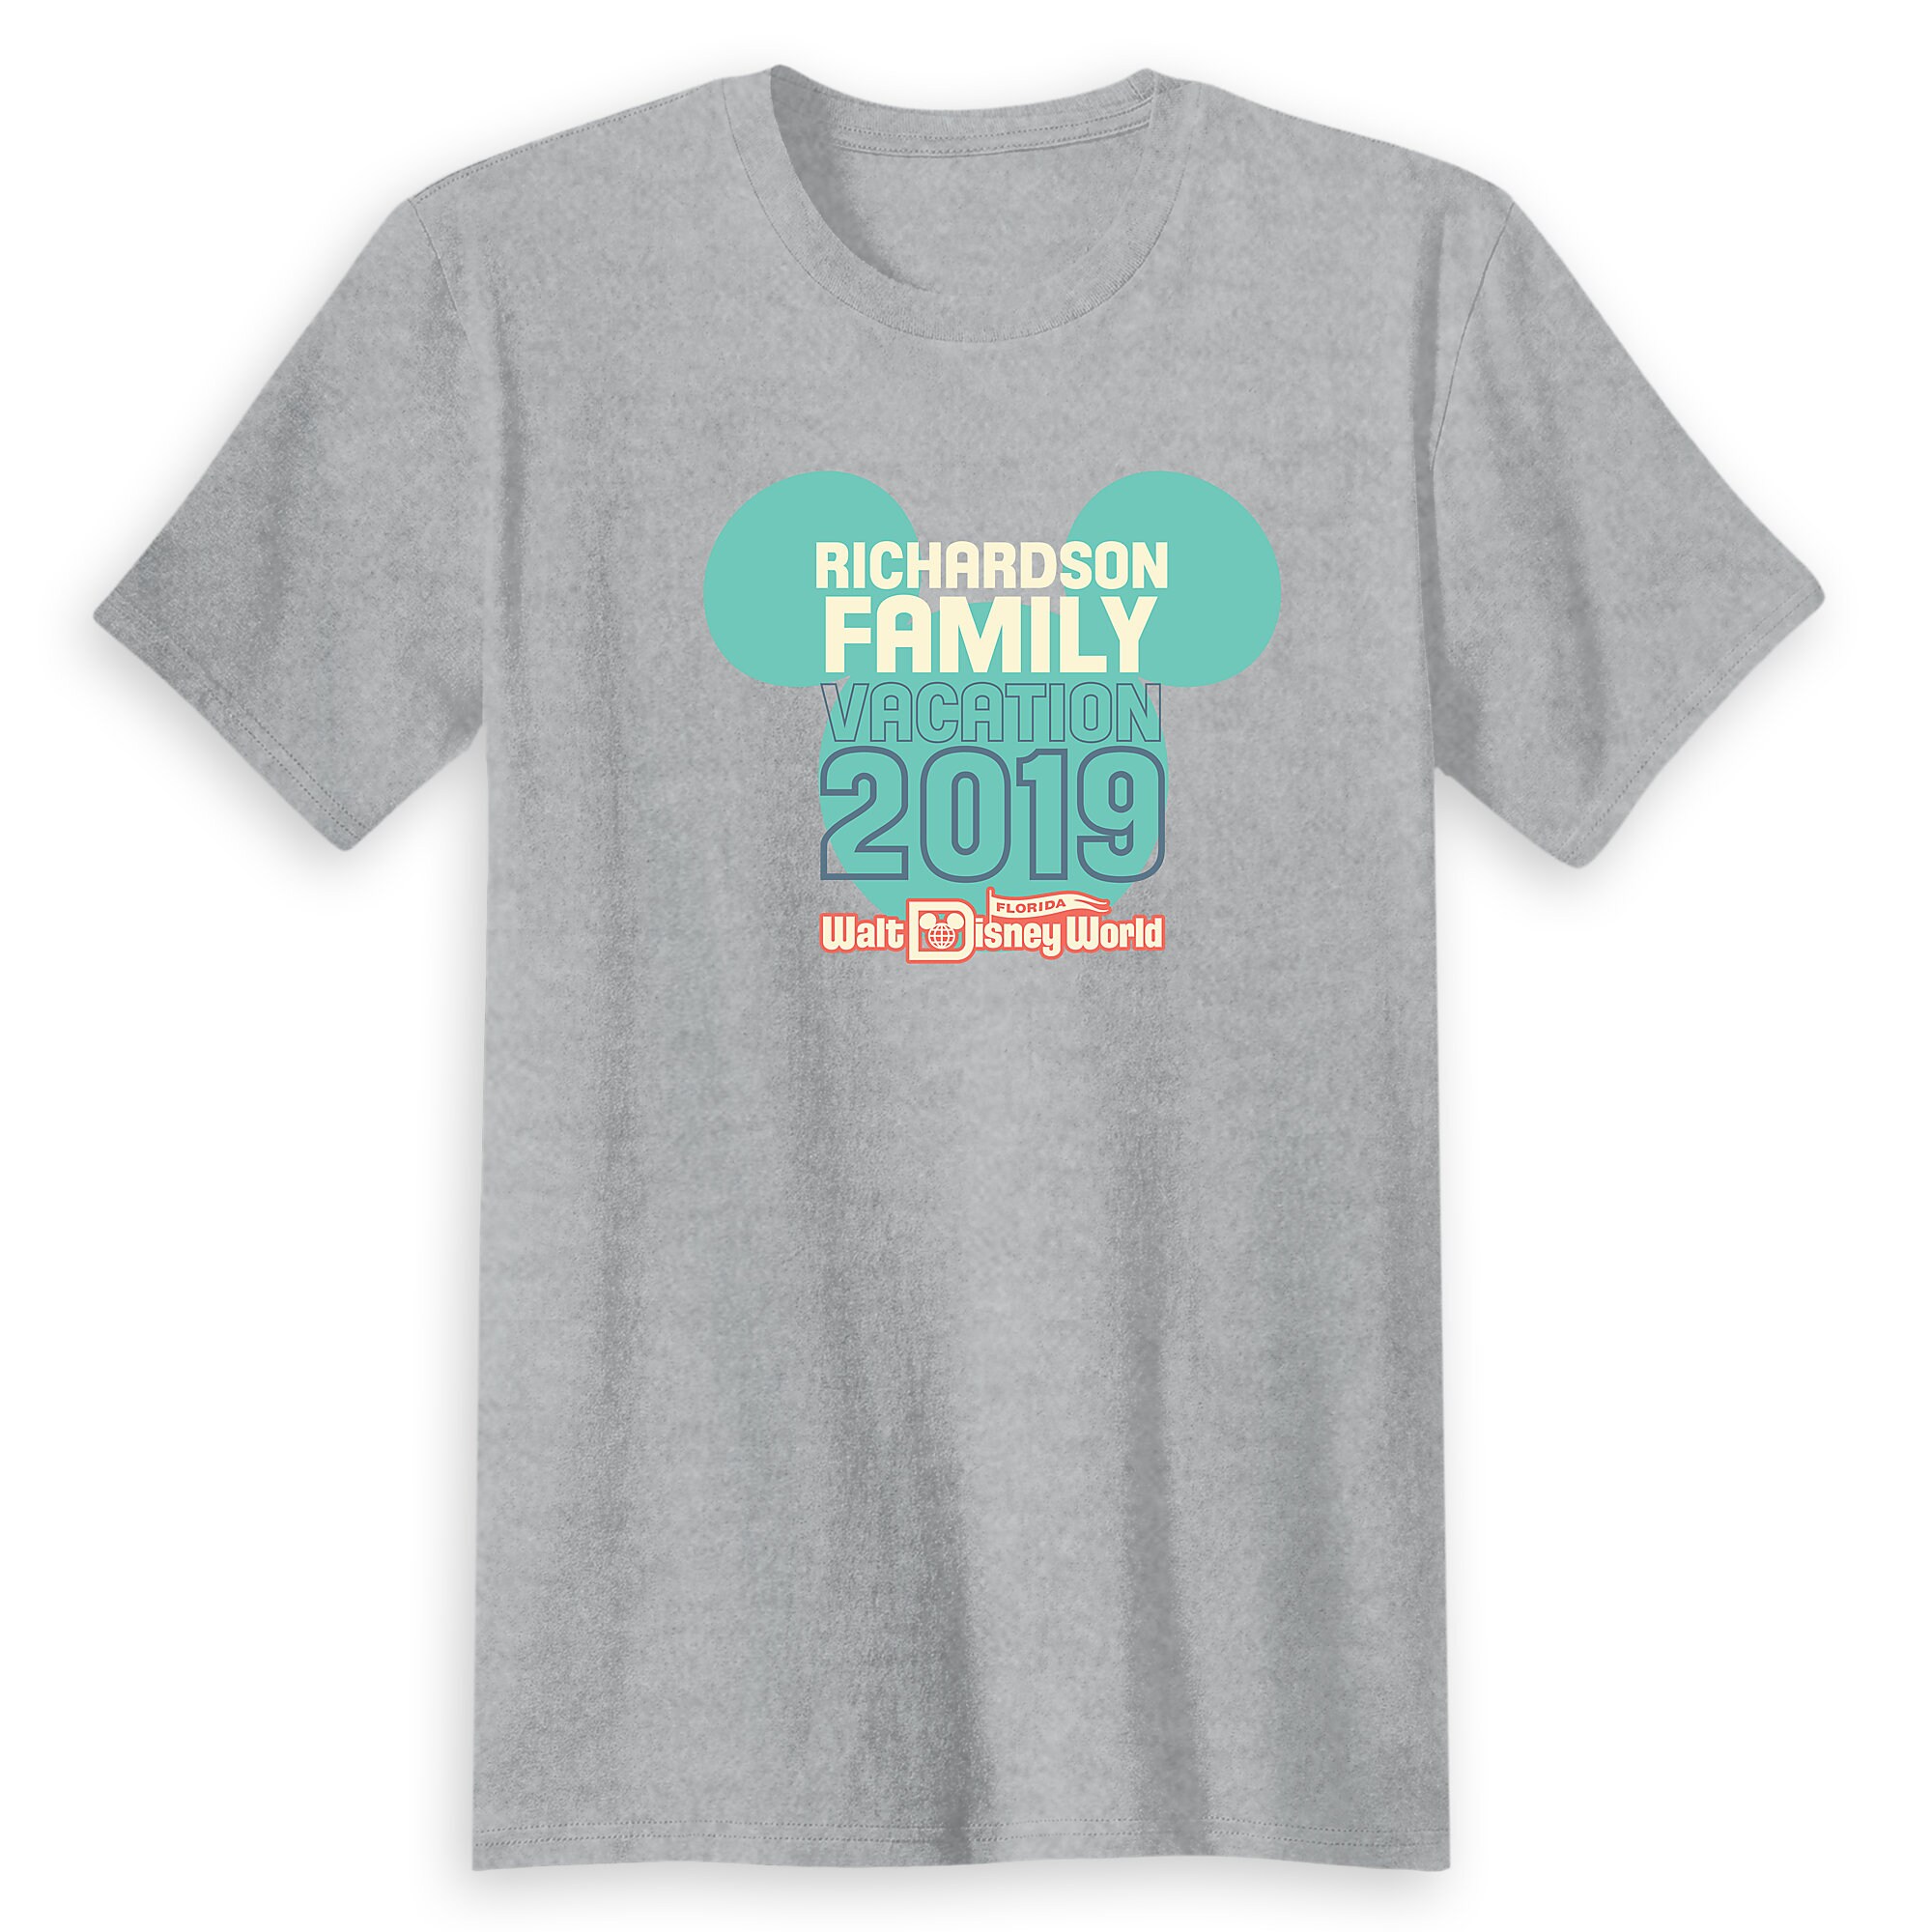 Adults' Mickey Mouse Icon T-Shirt - Walt Disney World - 2019 - Customized